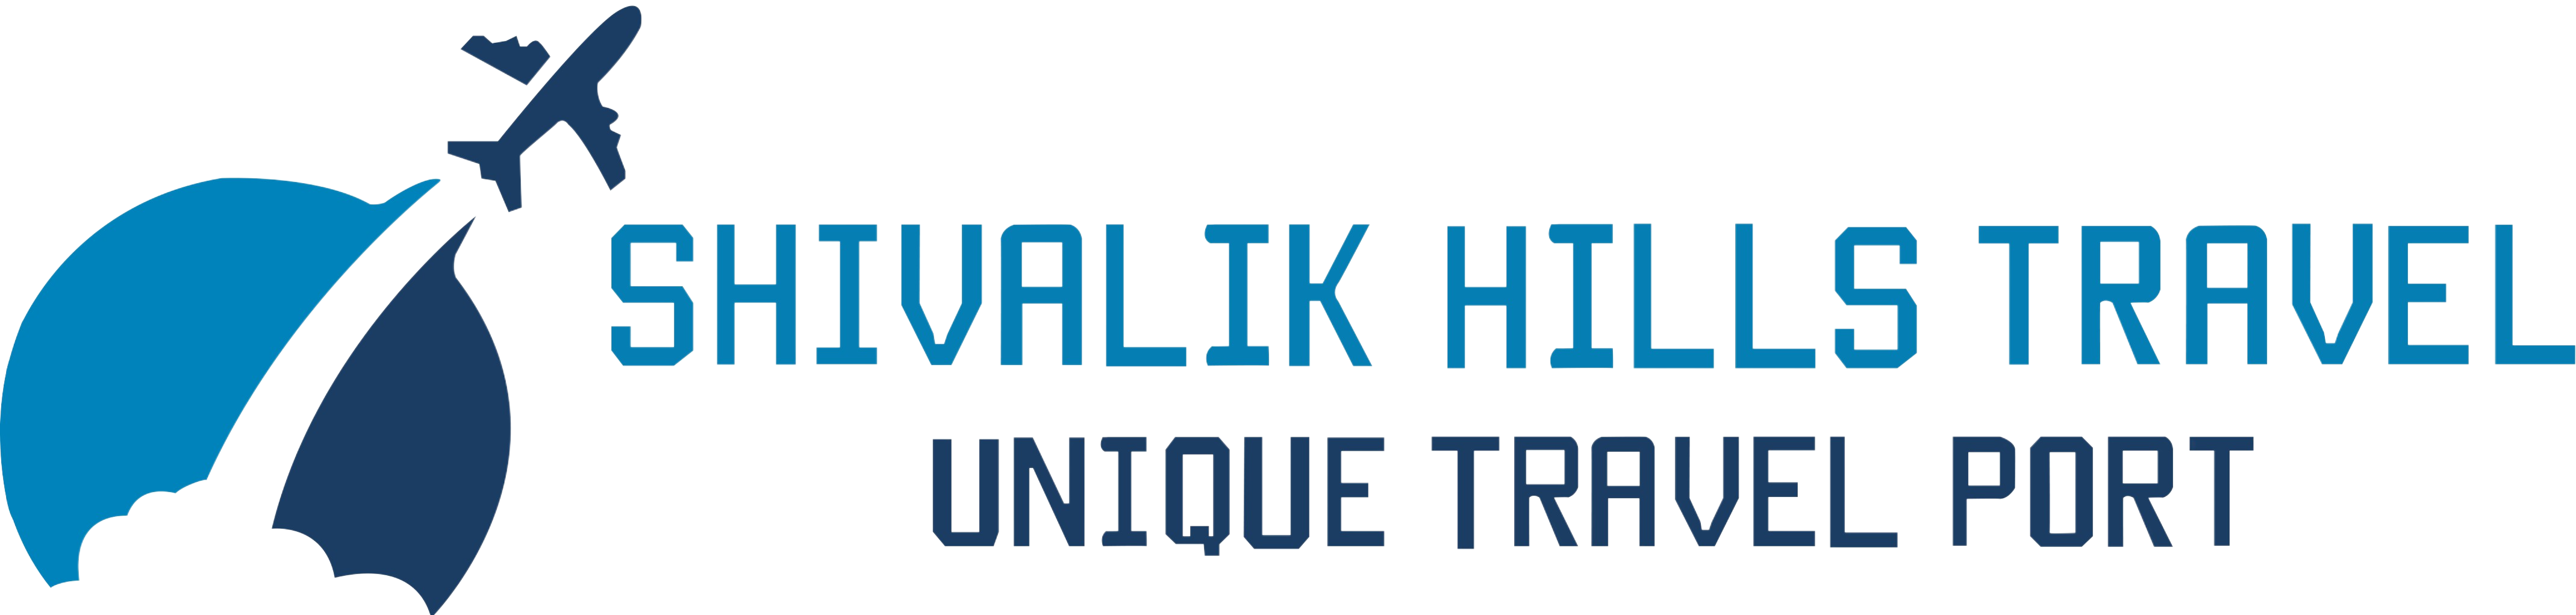 Shivalik hills logo png